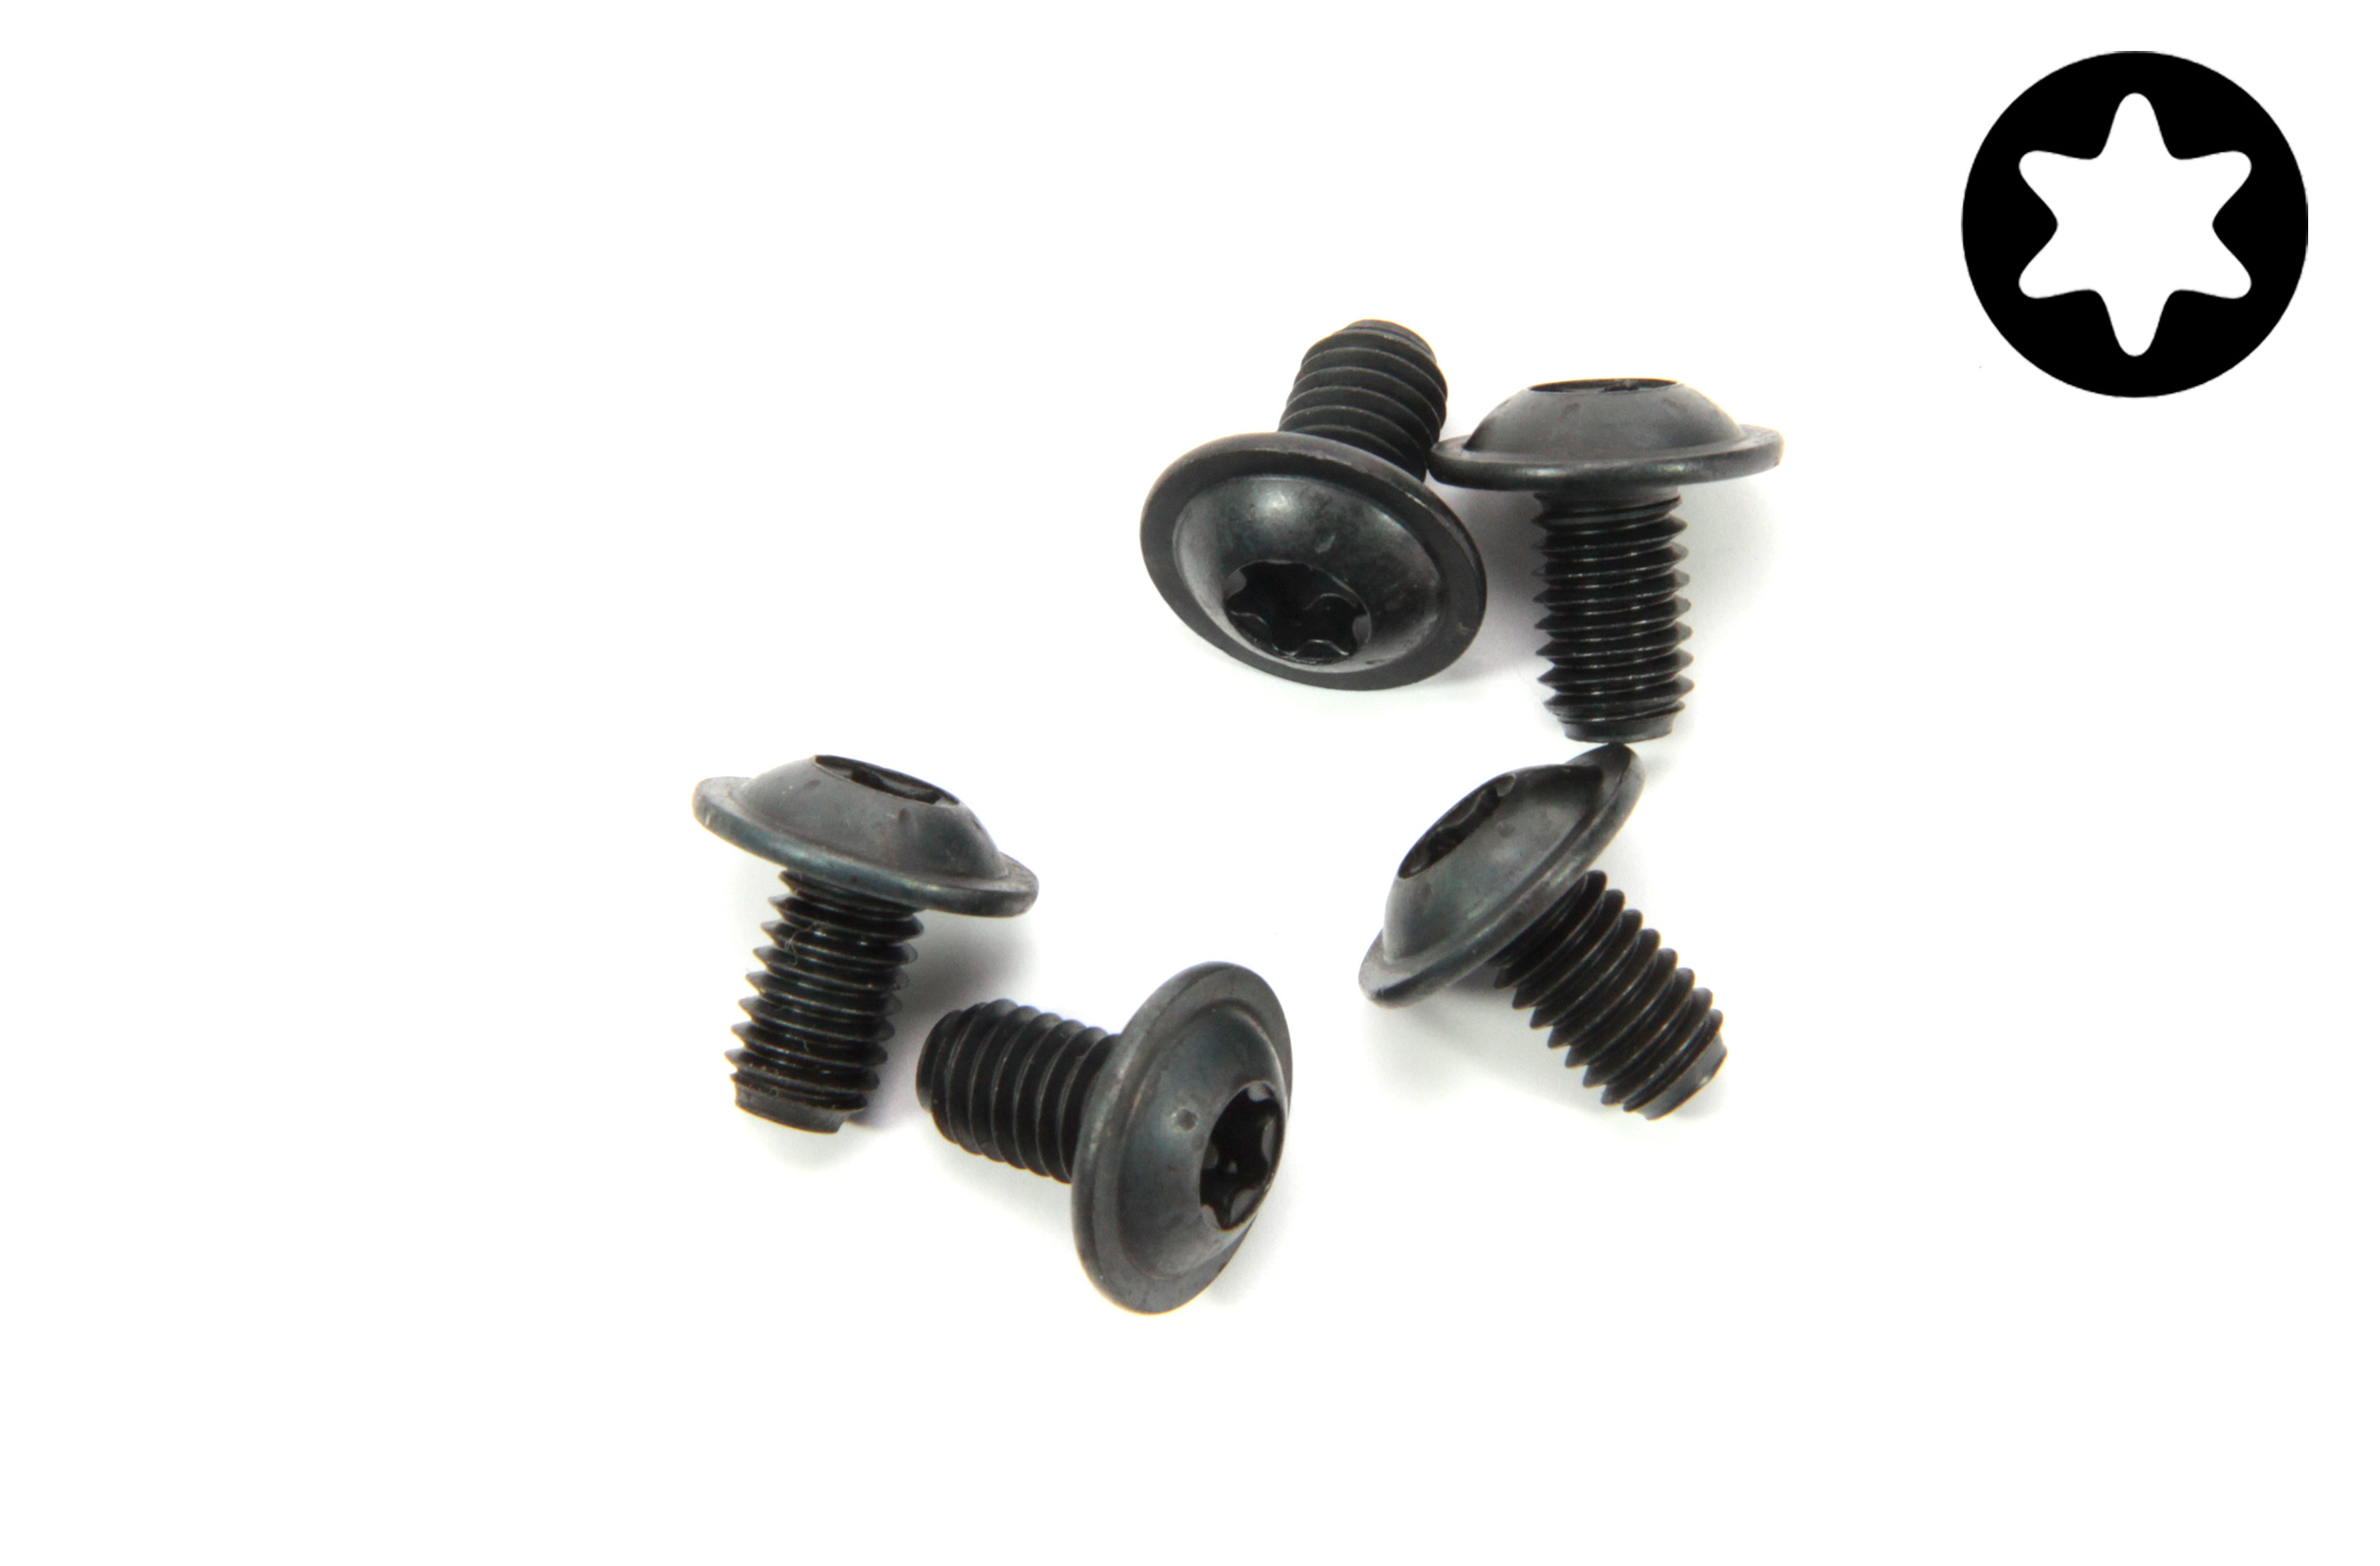 6917/16 FG Pan-head flange screw with Torx M6 x 16 mm, 5 pieces